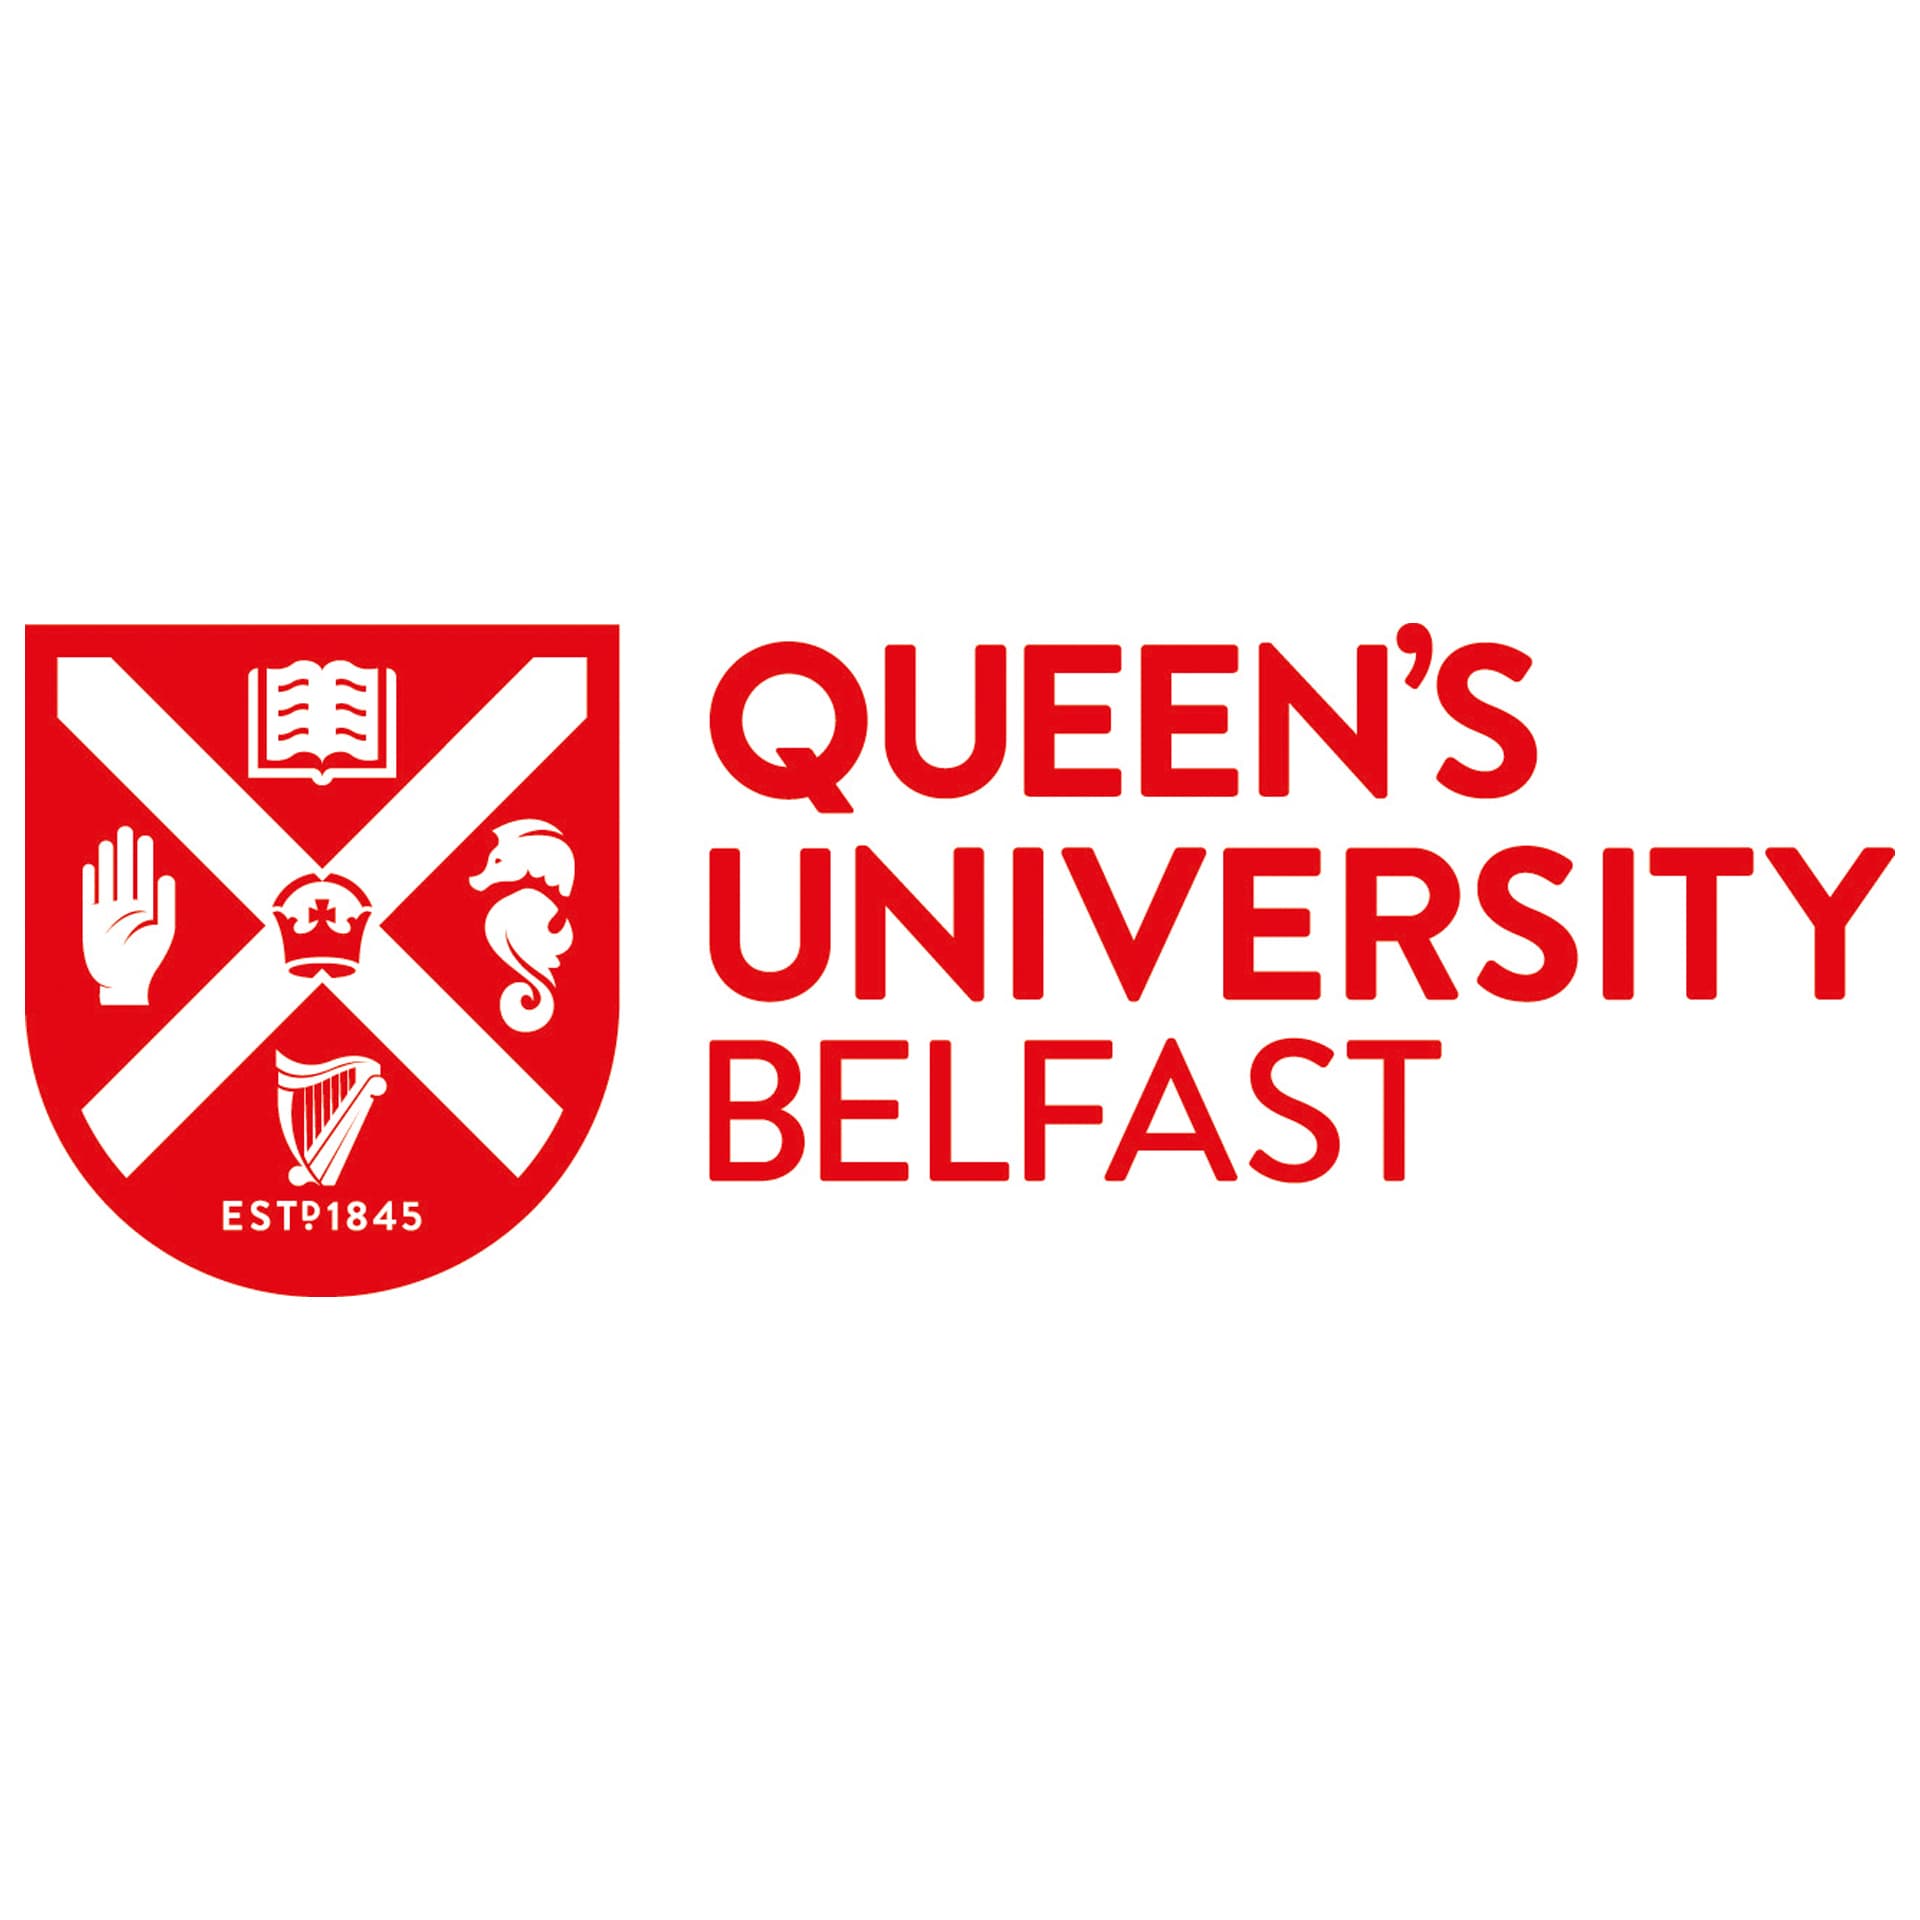 Queen’s University Belfast – The McClay Library